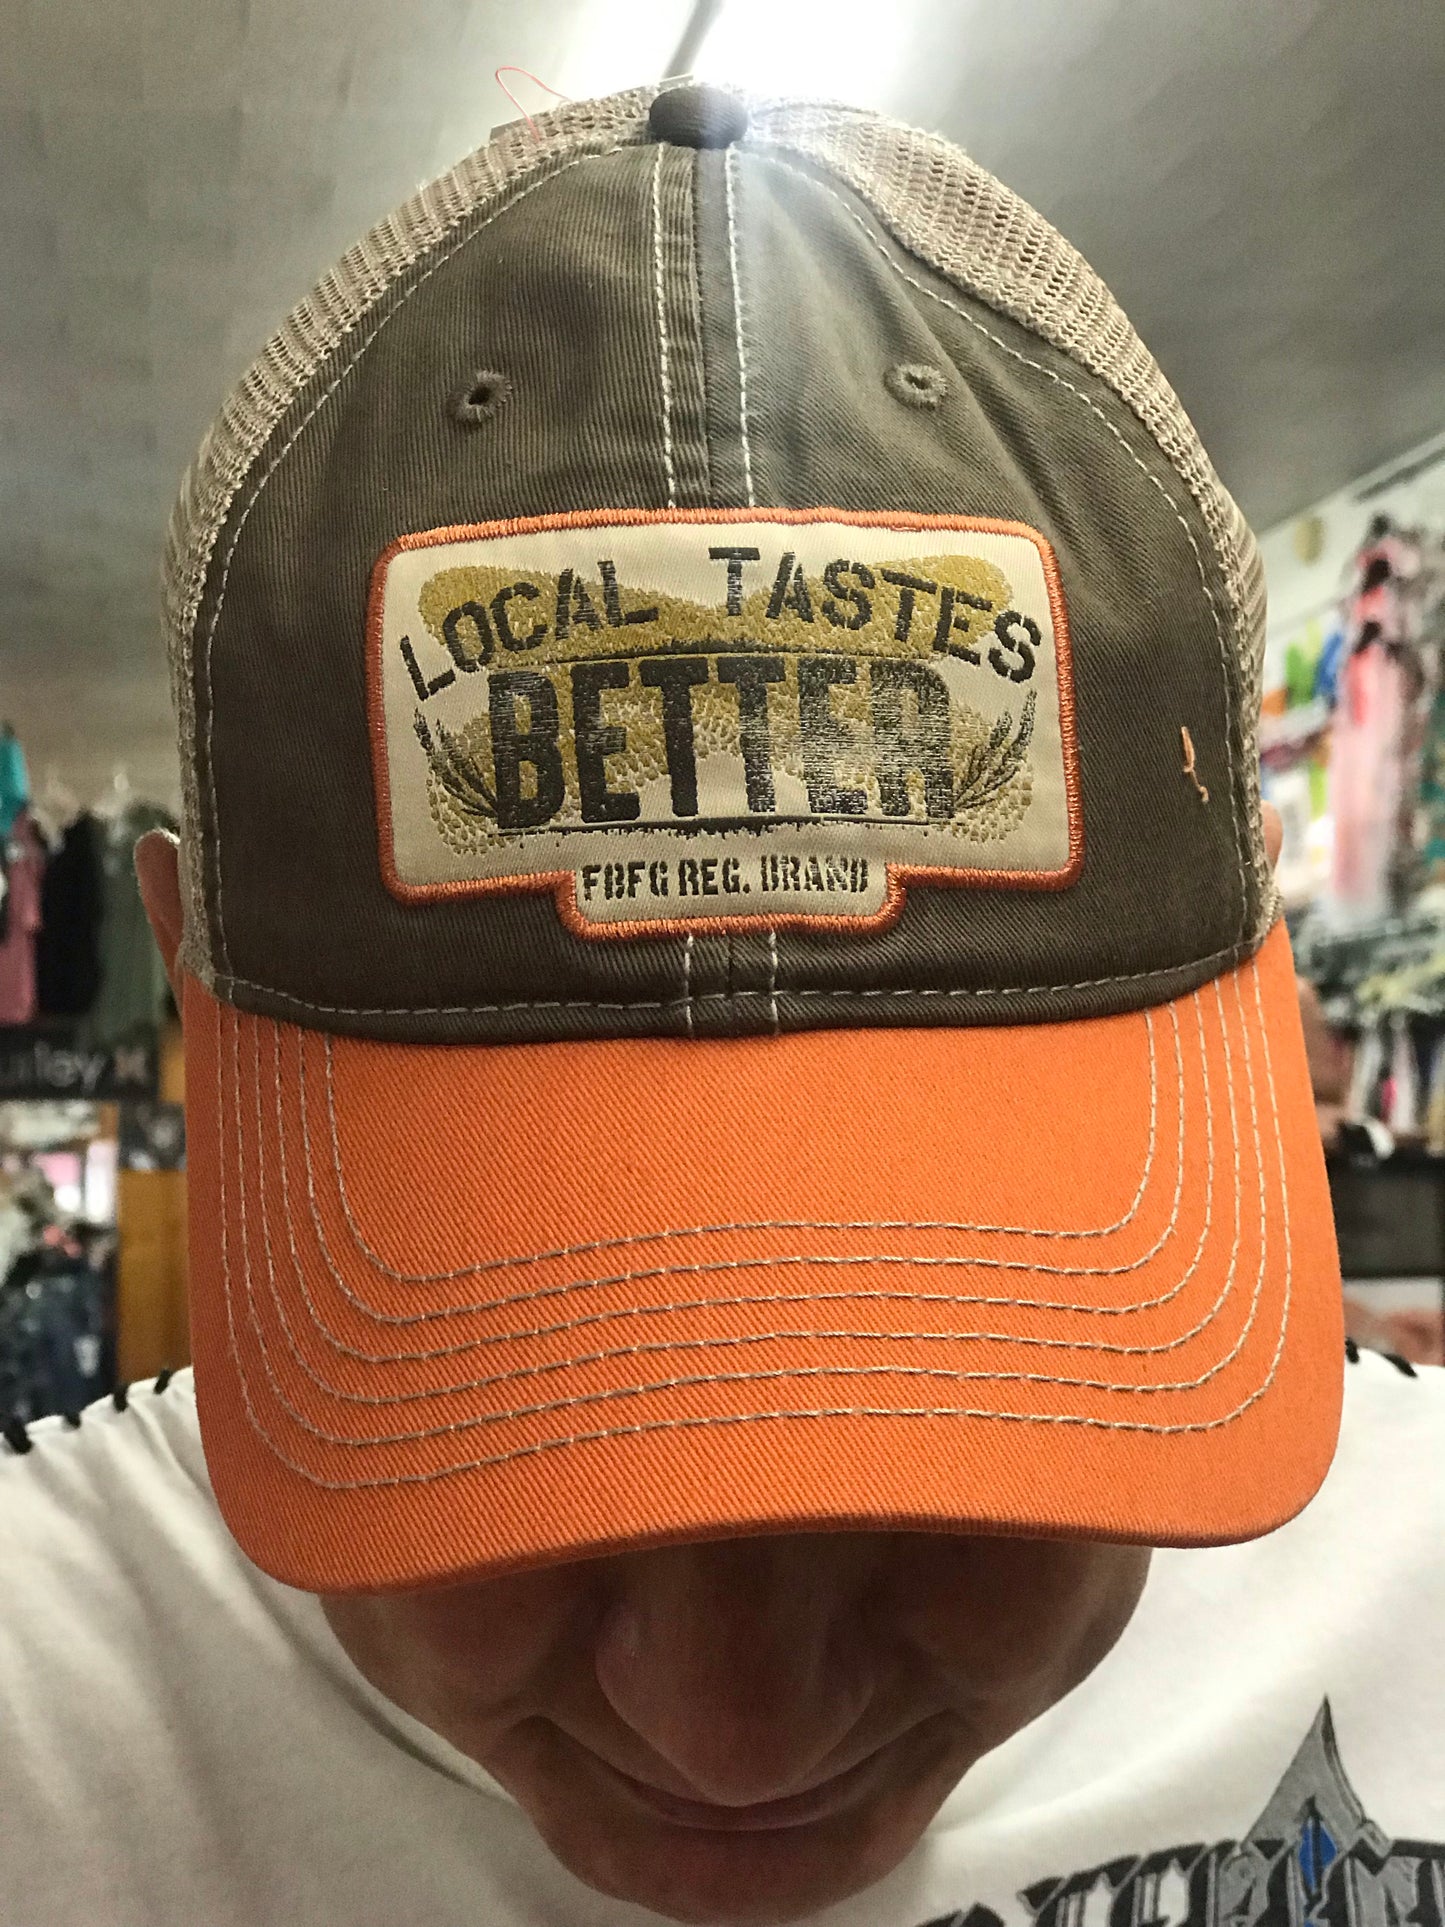 Local Tastes Better Hat